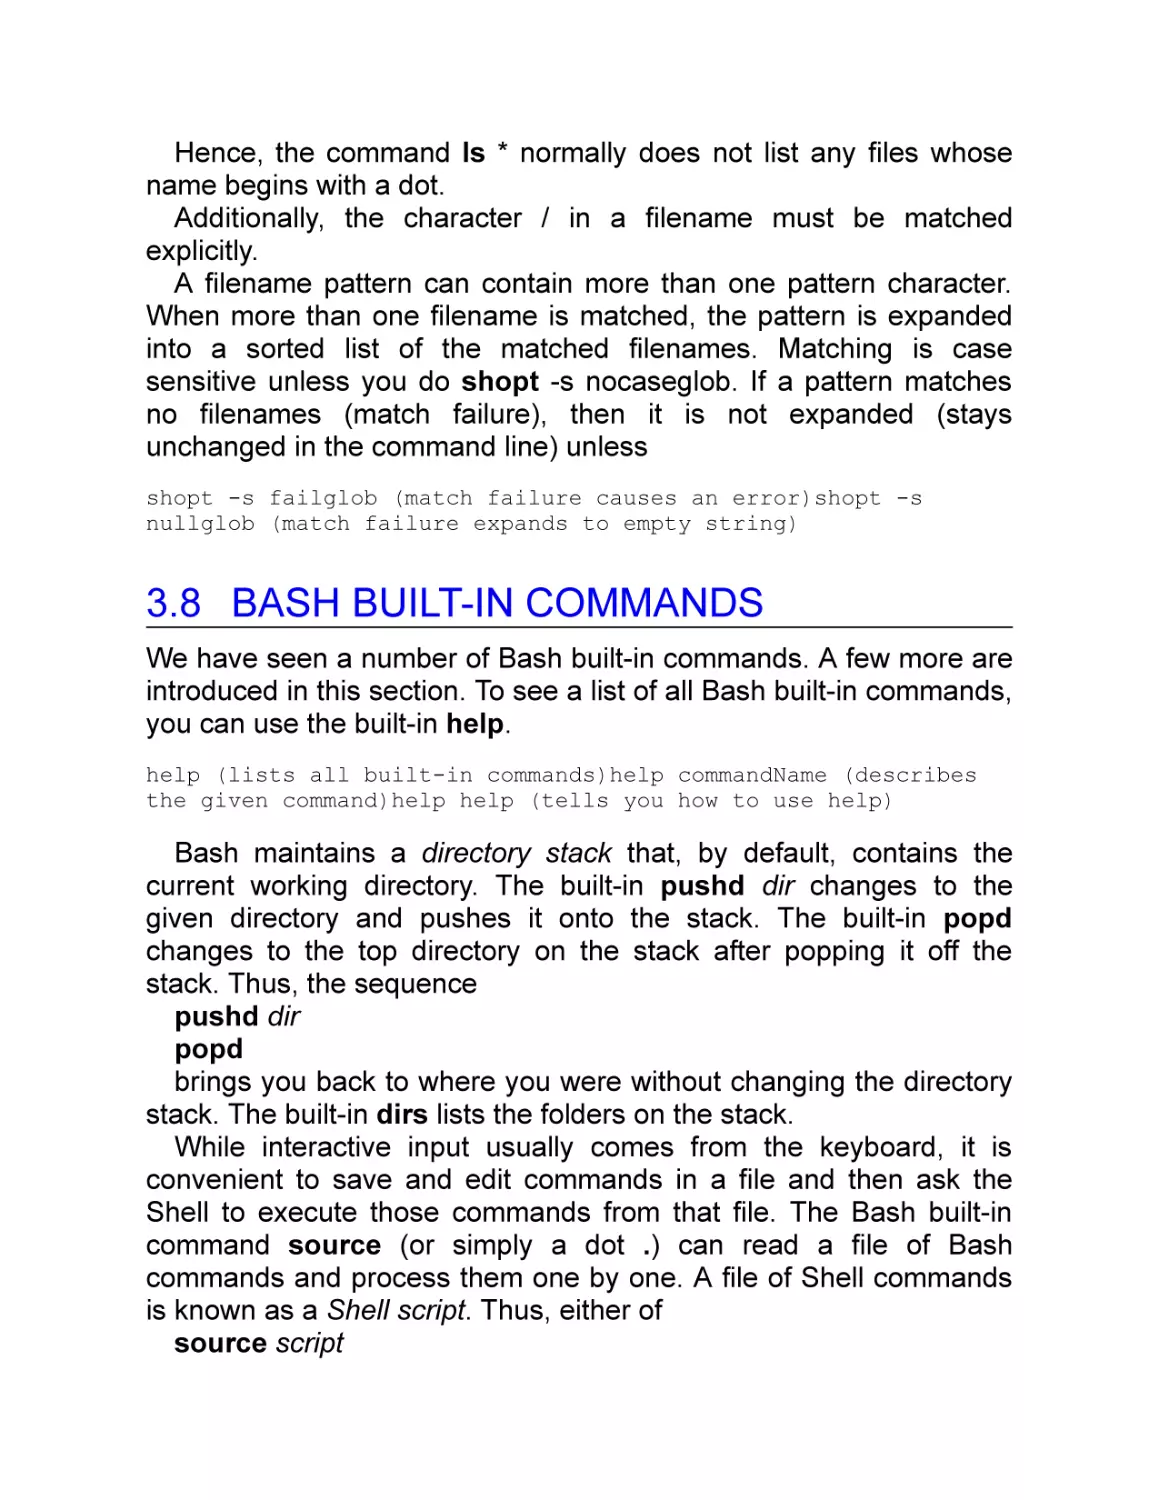 3.8 Bash Built-in Commands